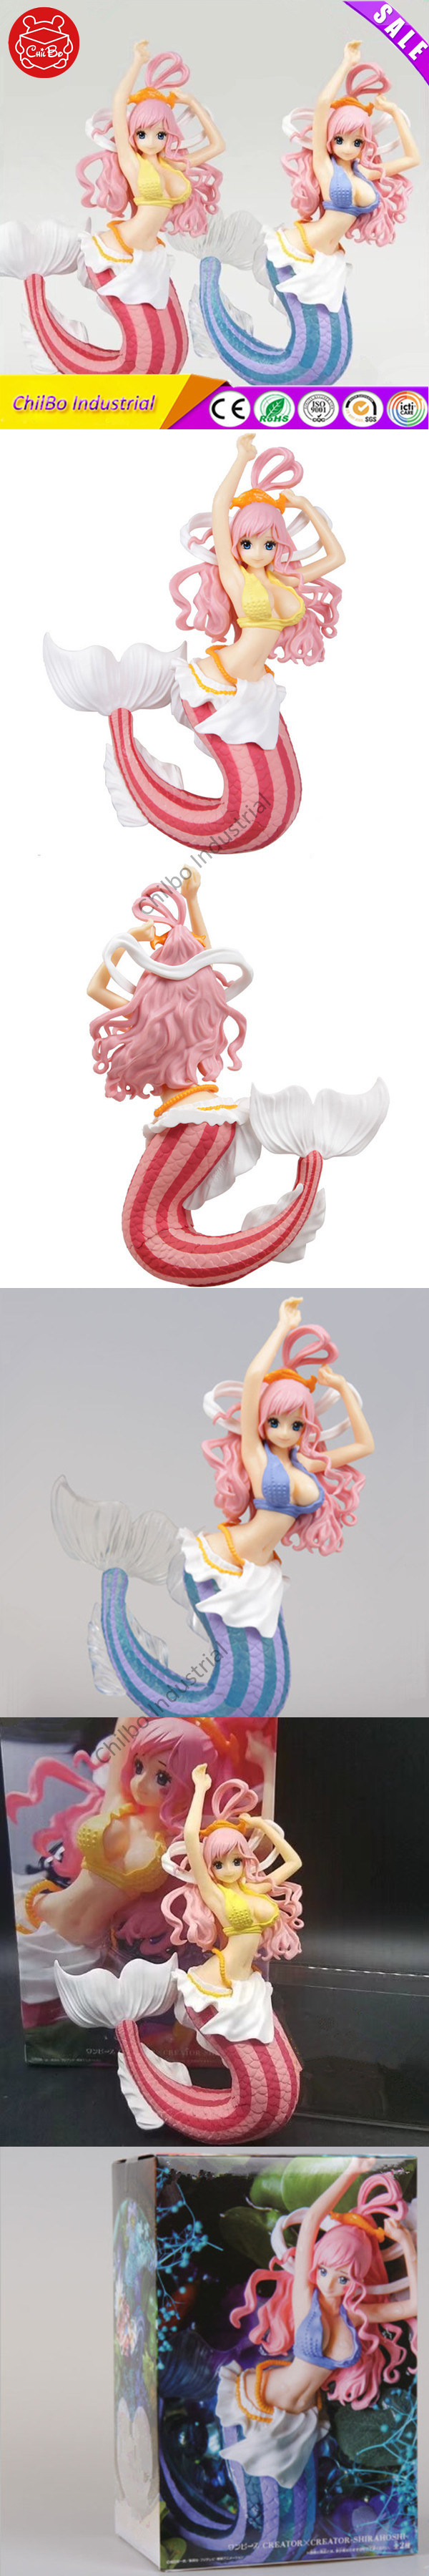 Cartoon Anime Character Plastic Figure Toy